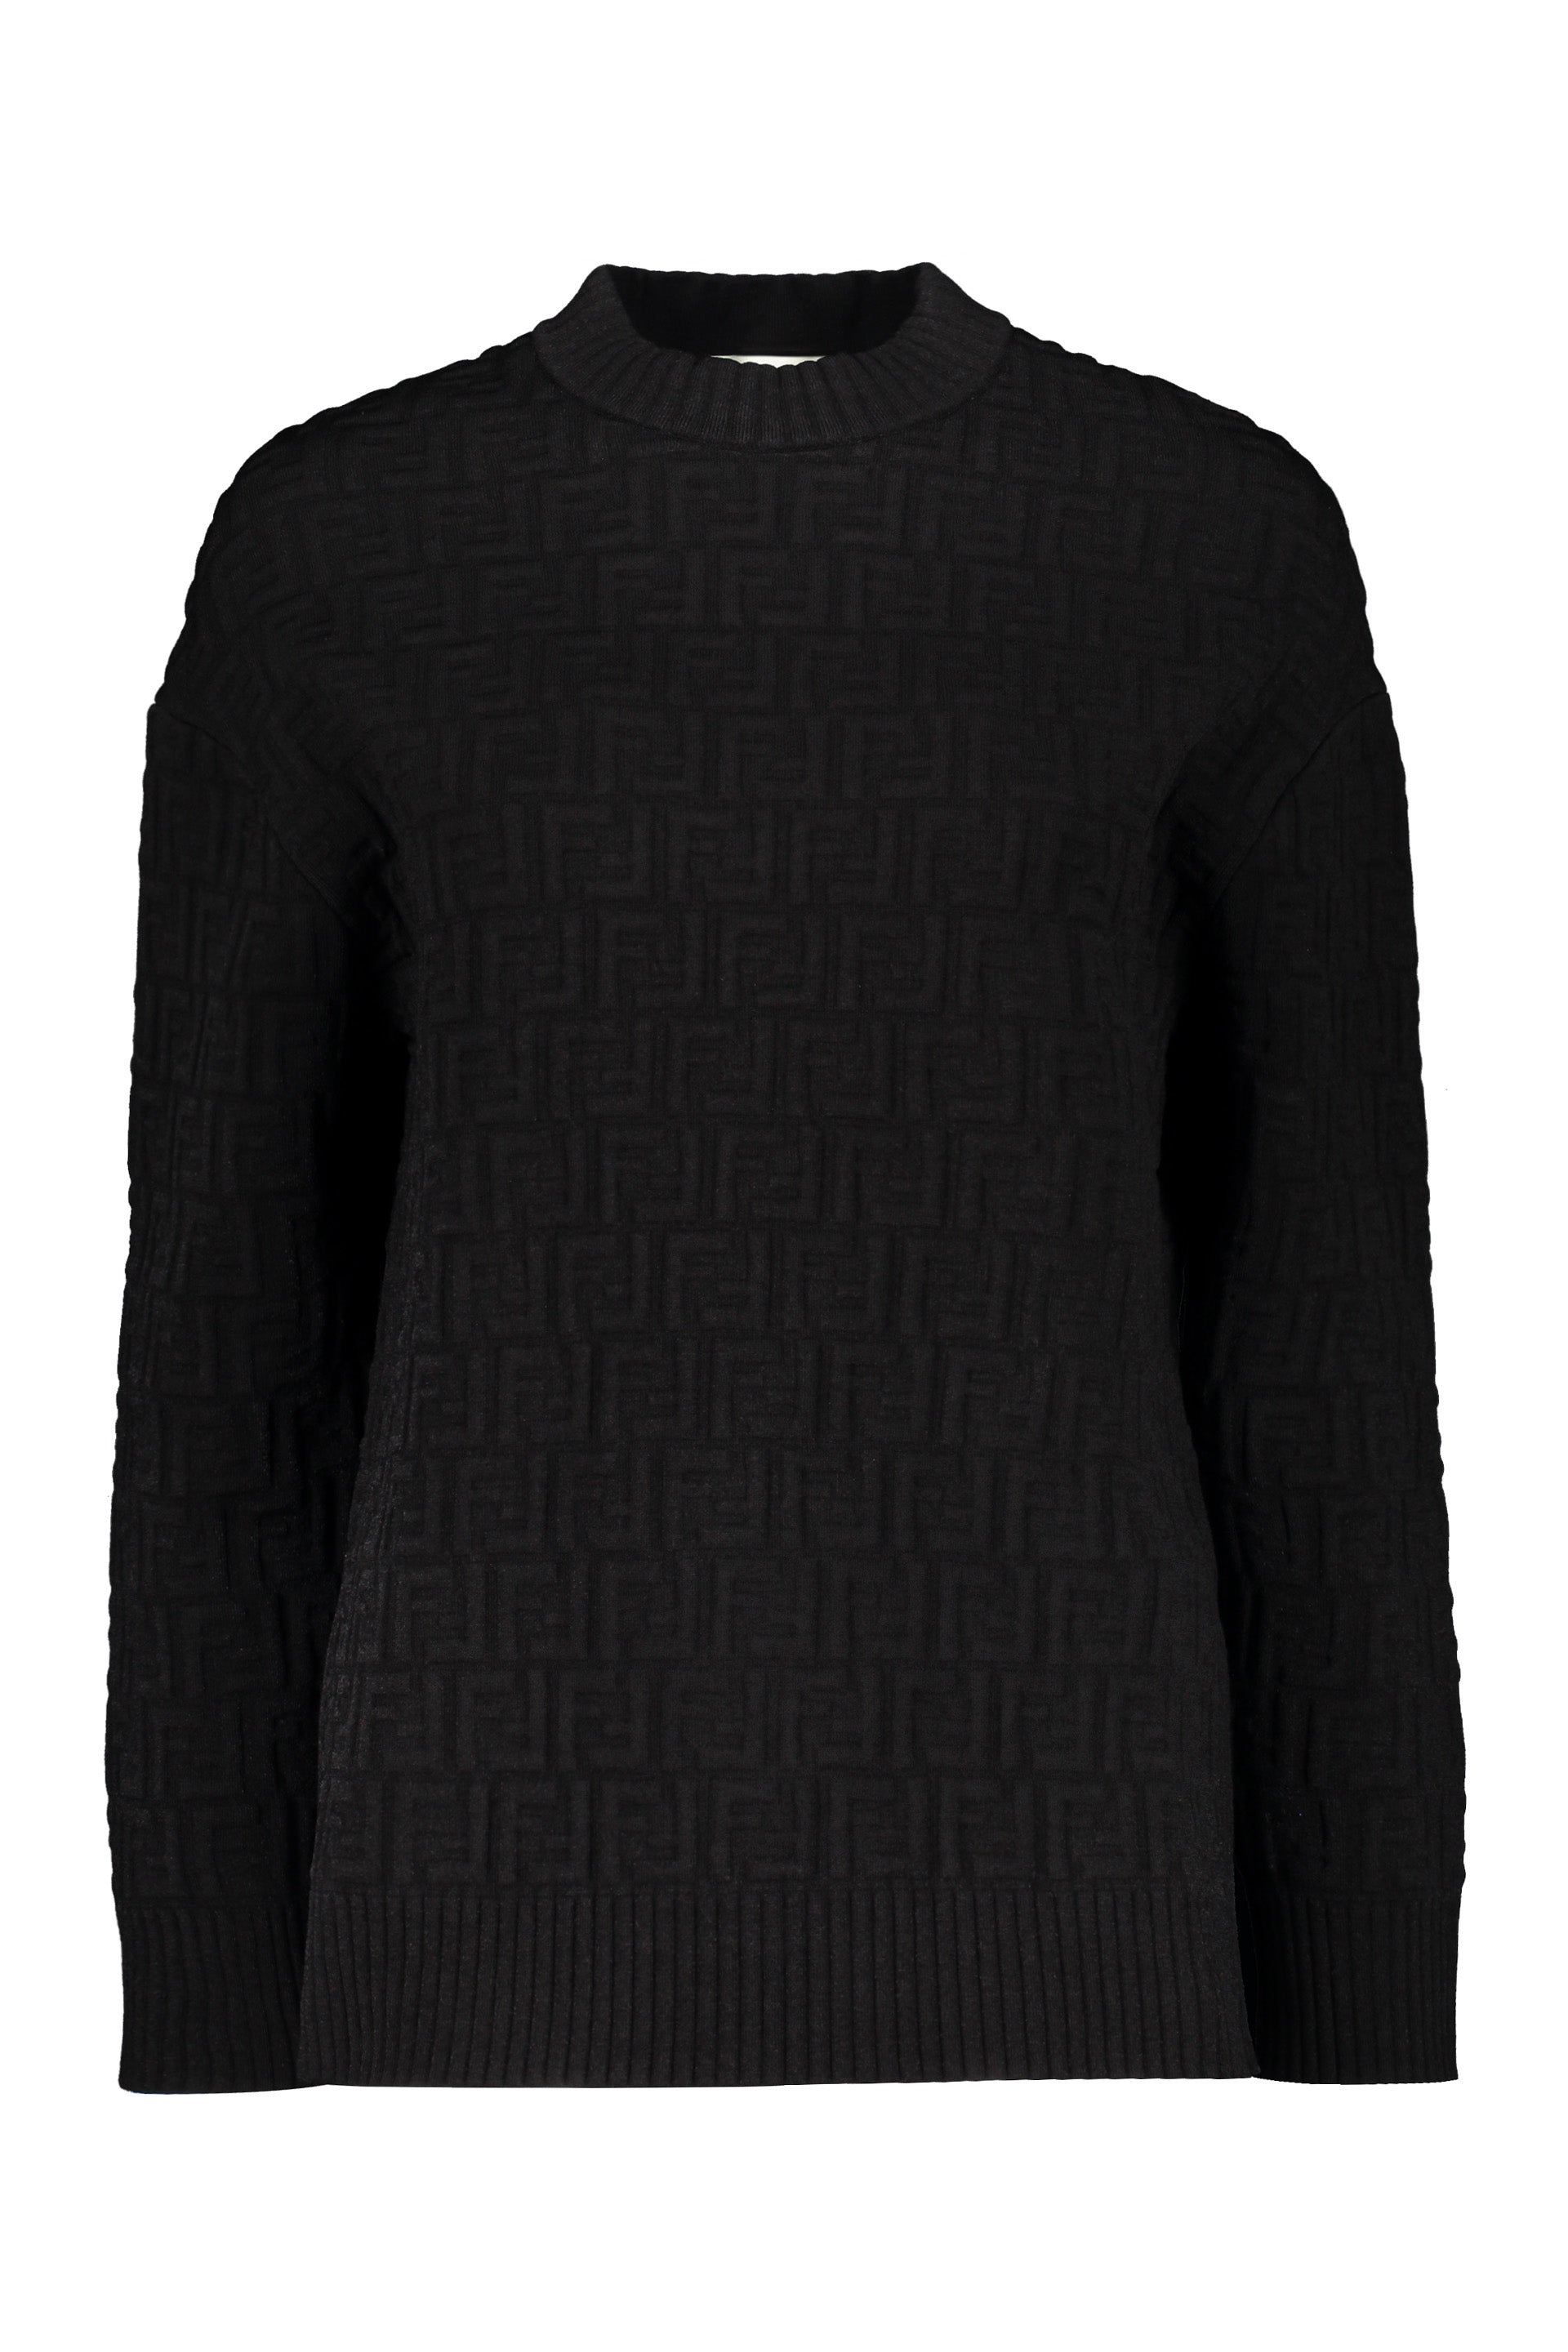 FF motif sweater